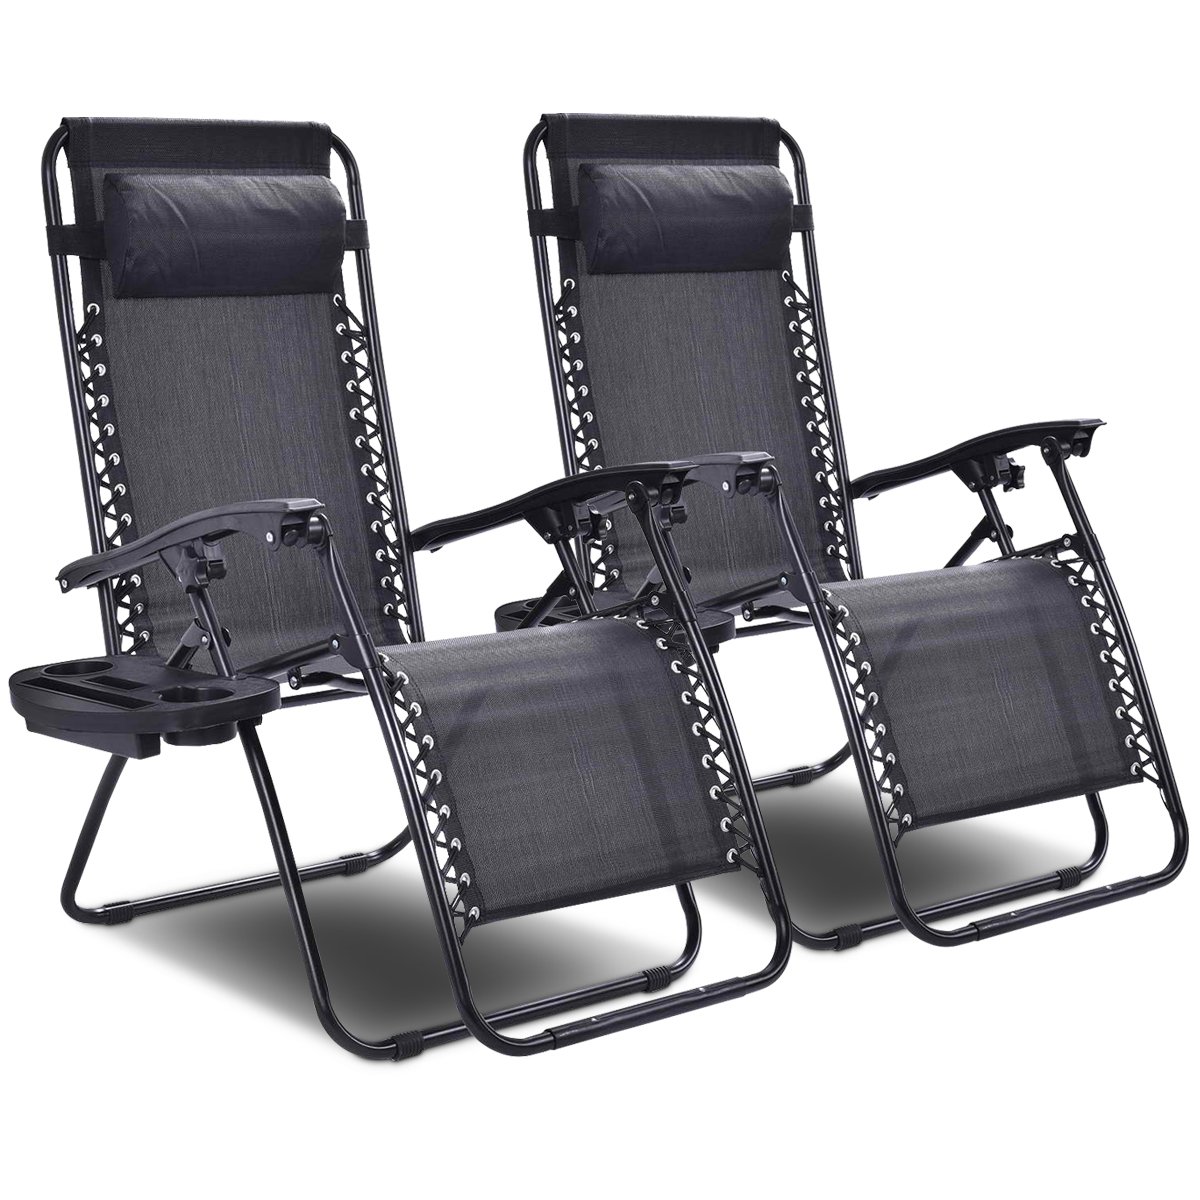 Topbuy 2PC Zero Gravity Chair Adjustable Recliners Textiliene Black - image 1 of 6